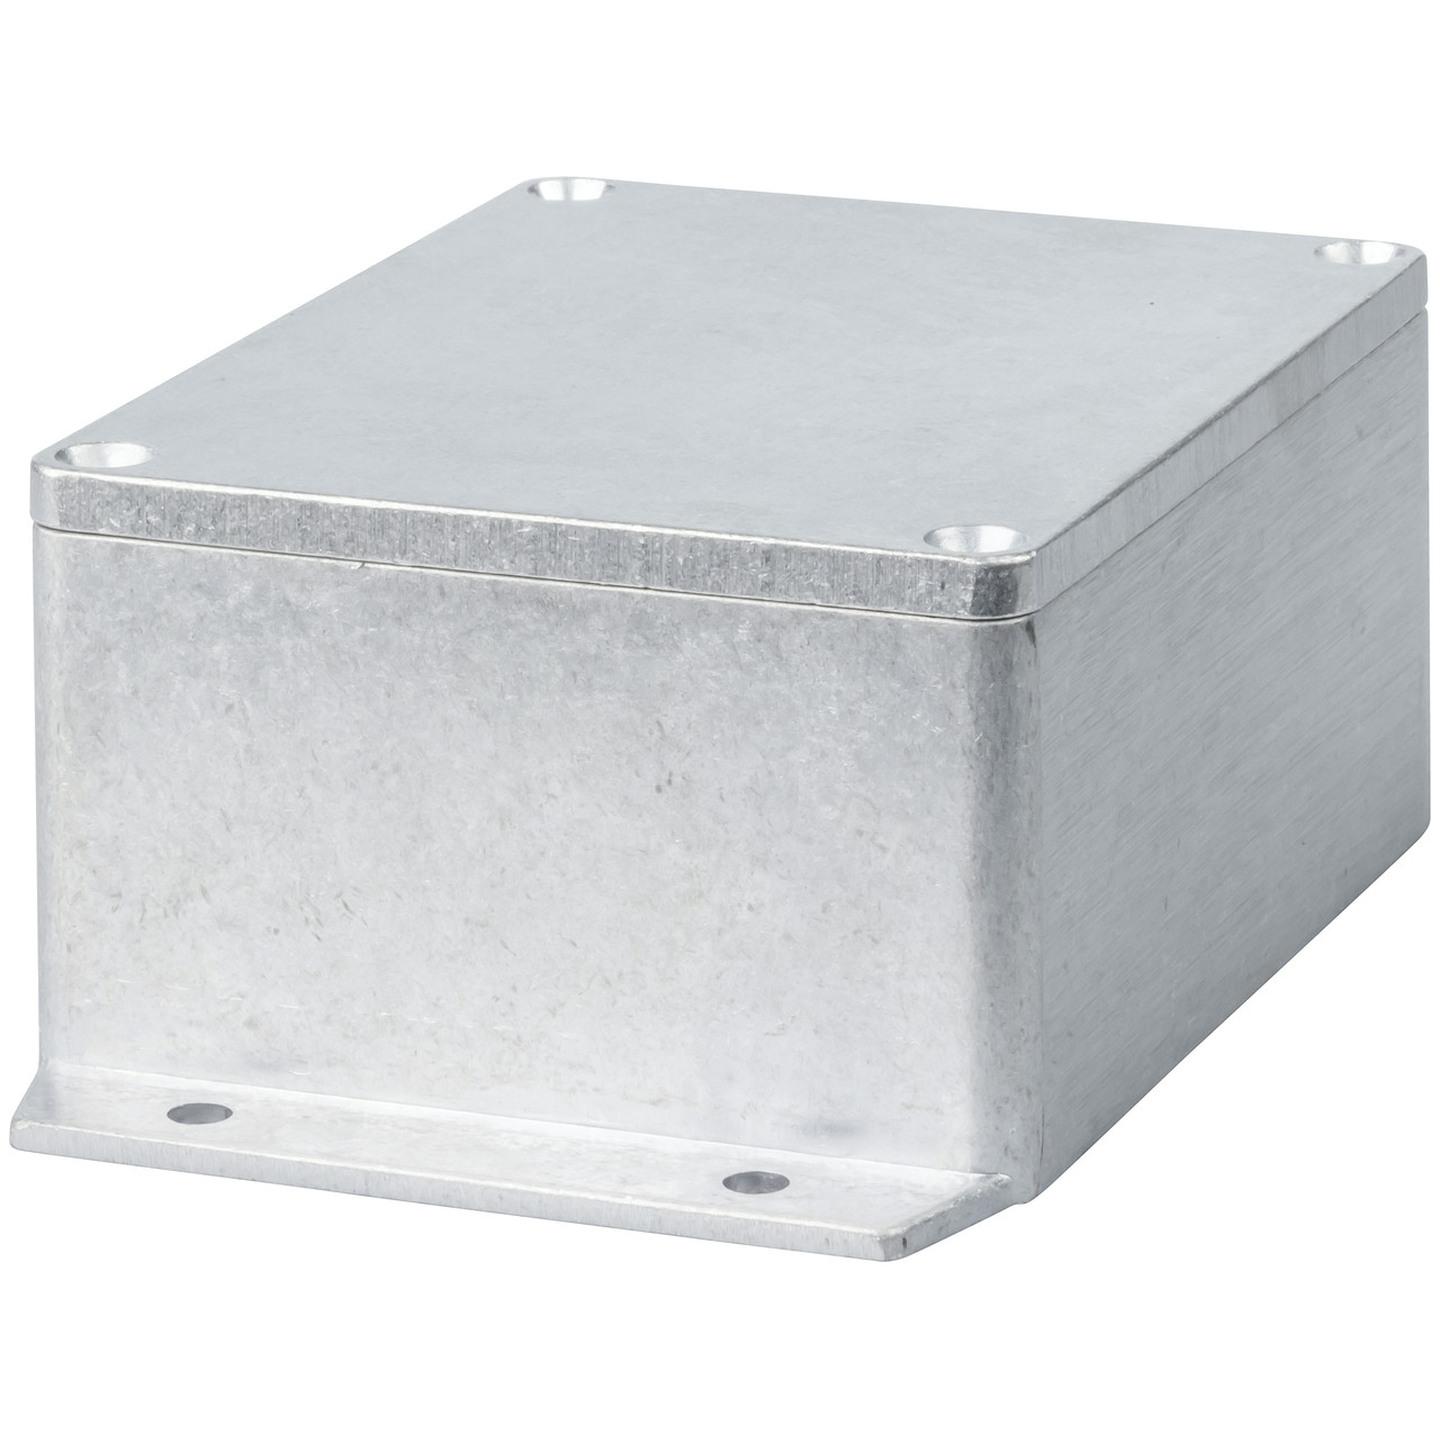 IP65 Sealed Diecast Aluminium Boxes - Flanged - 115Wx90Dx55Hmm